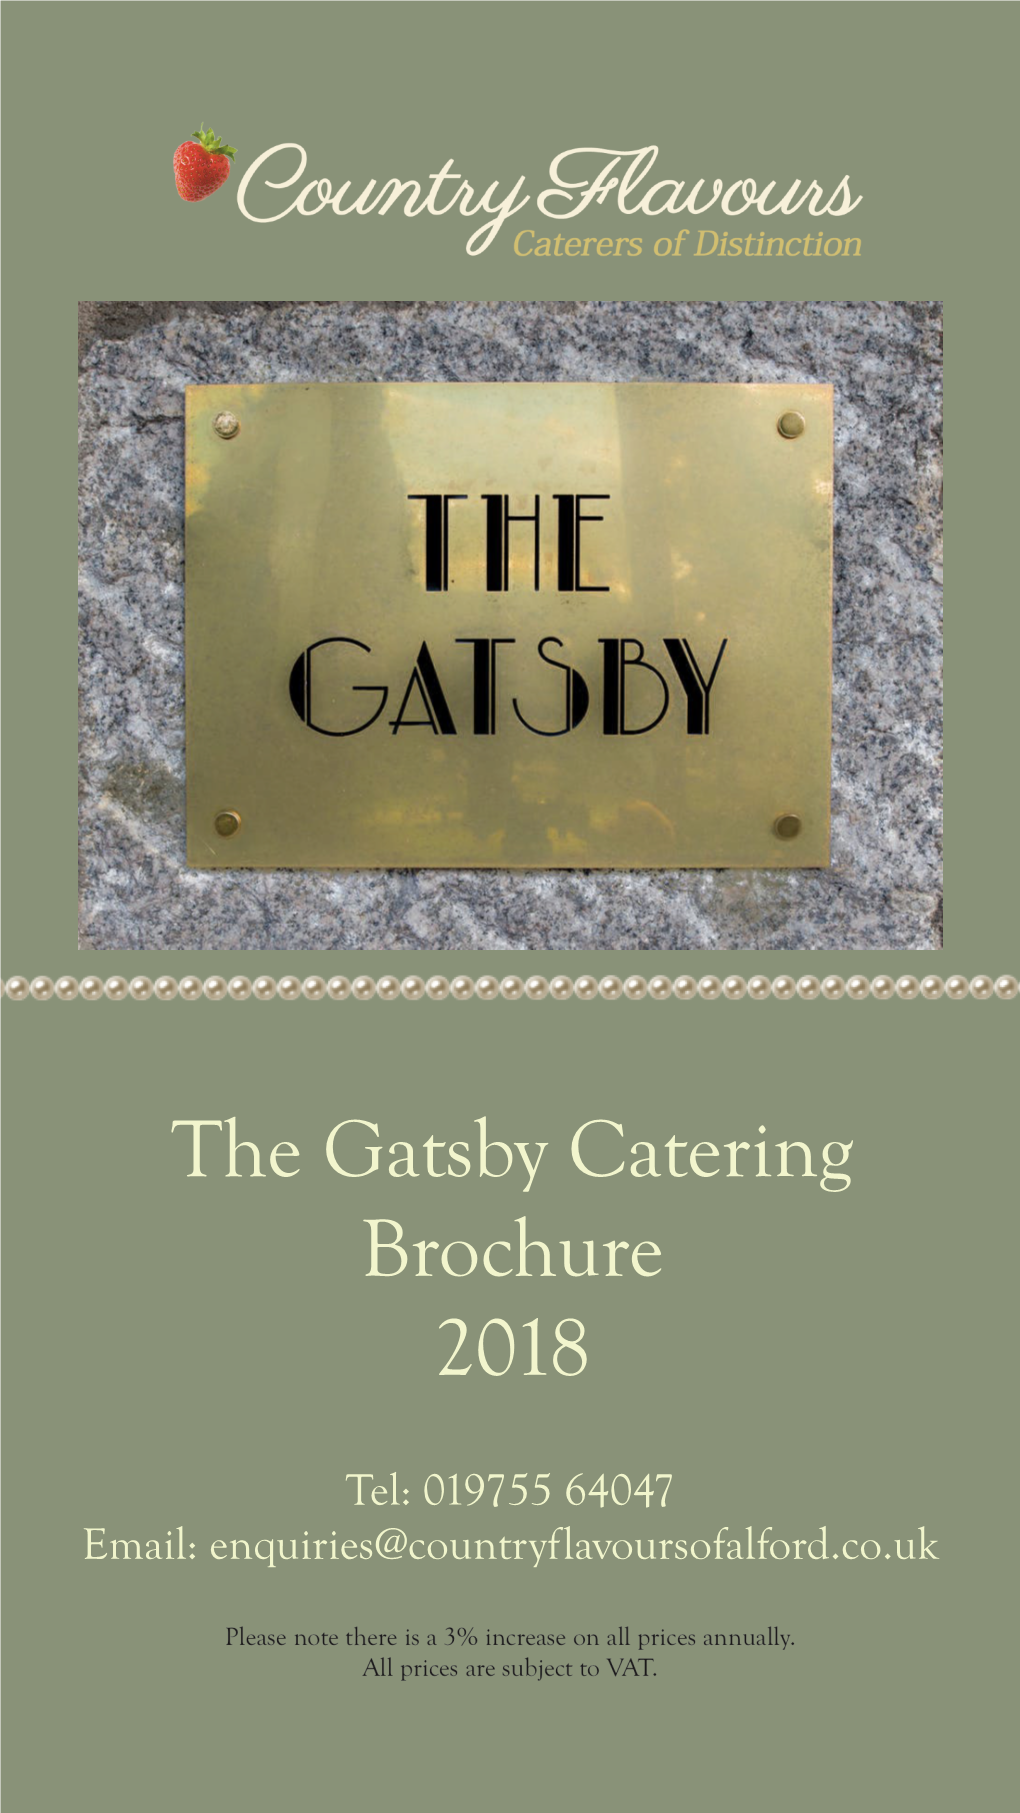 The Gatsby Brochure